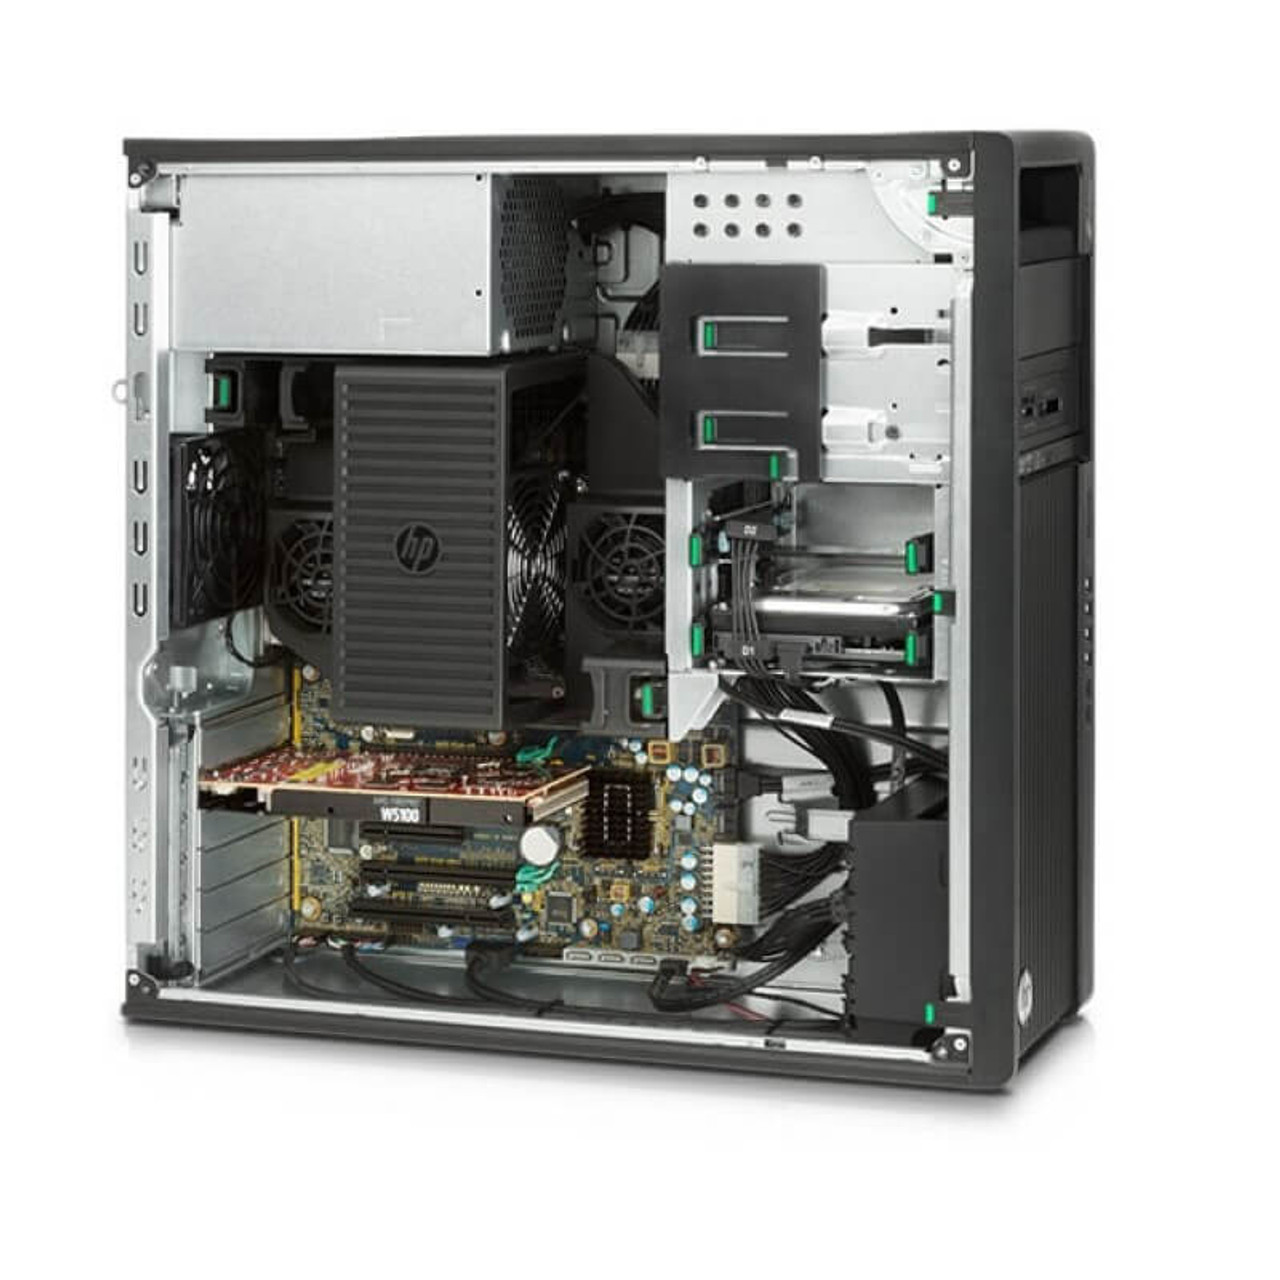 HP Z440 AutoCAD Workstation E5-1630 V4 4 Cores 8 Threads 3.7Ghz 128GB 250GB  SSD Quadro K2200 Win 10 Pro